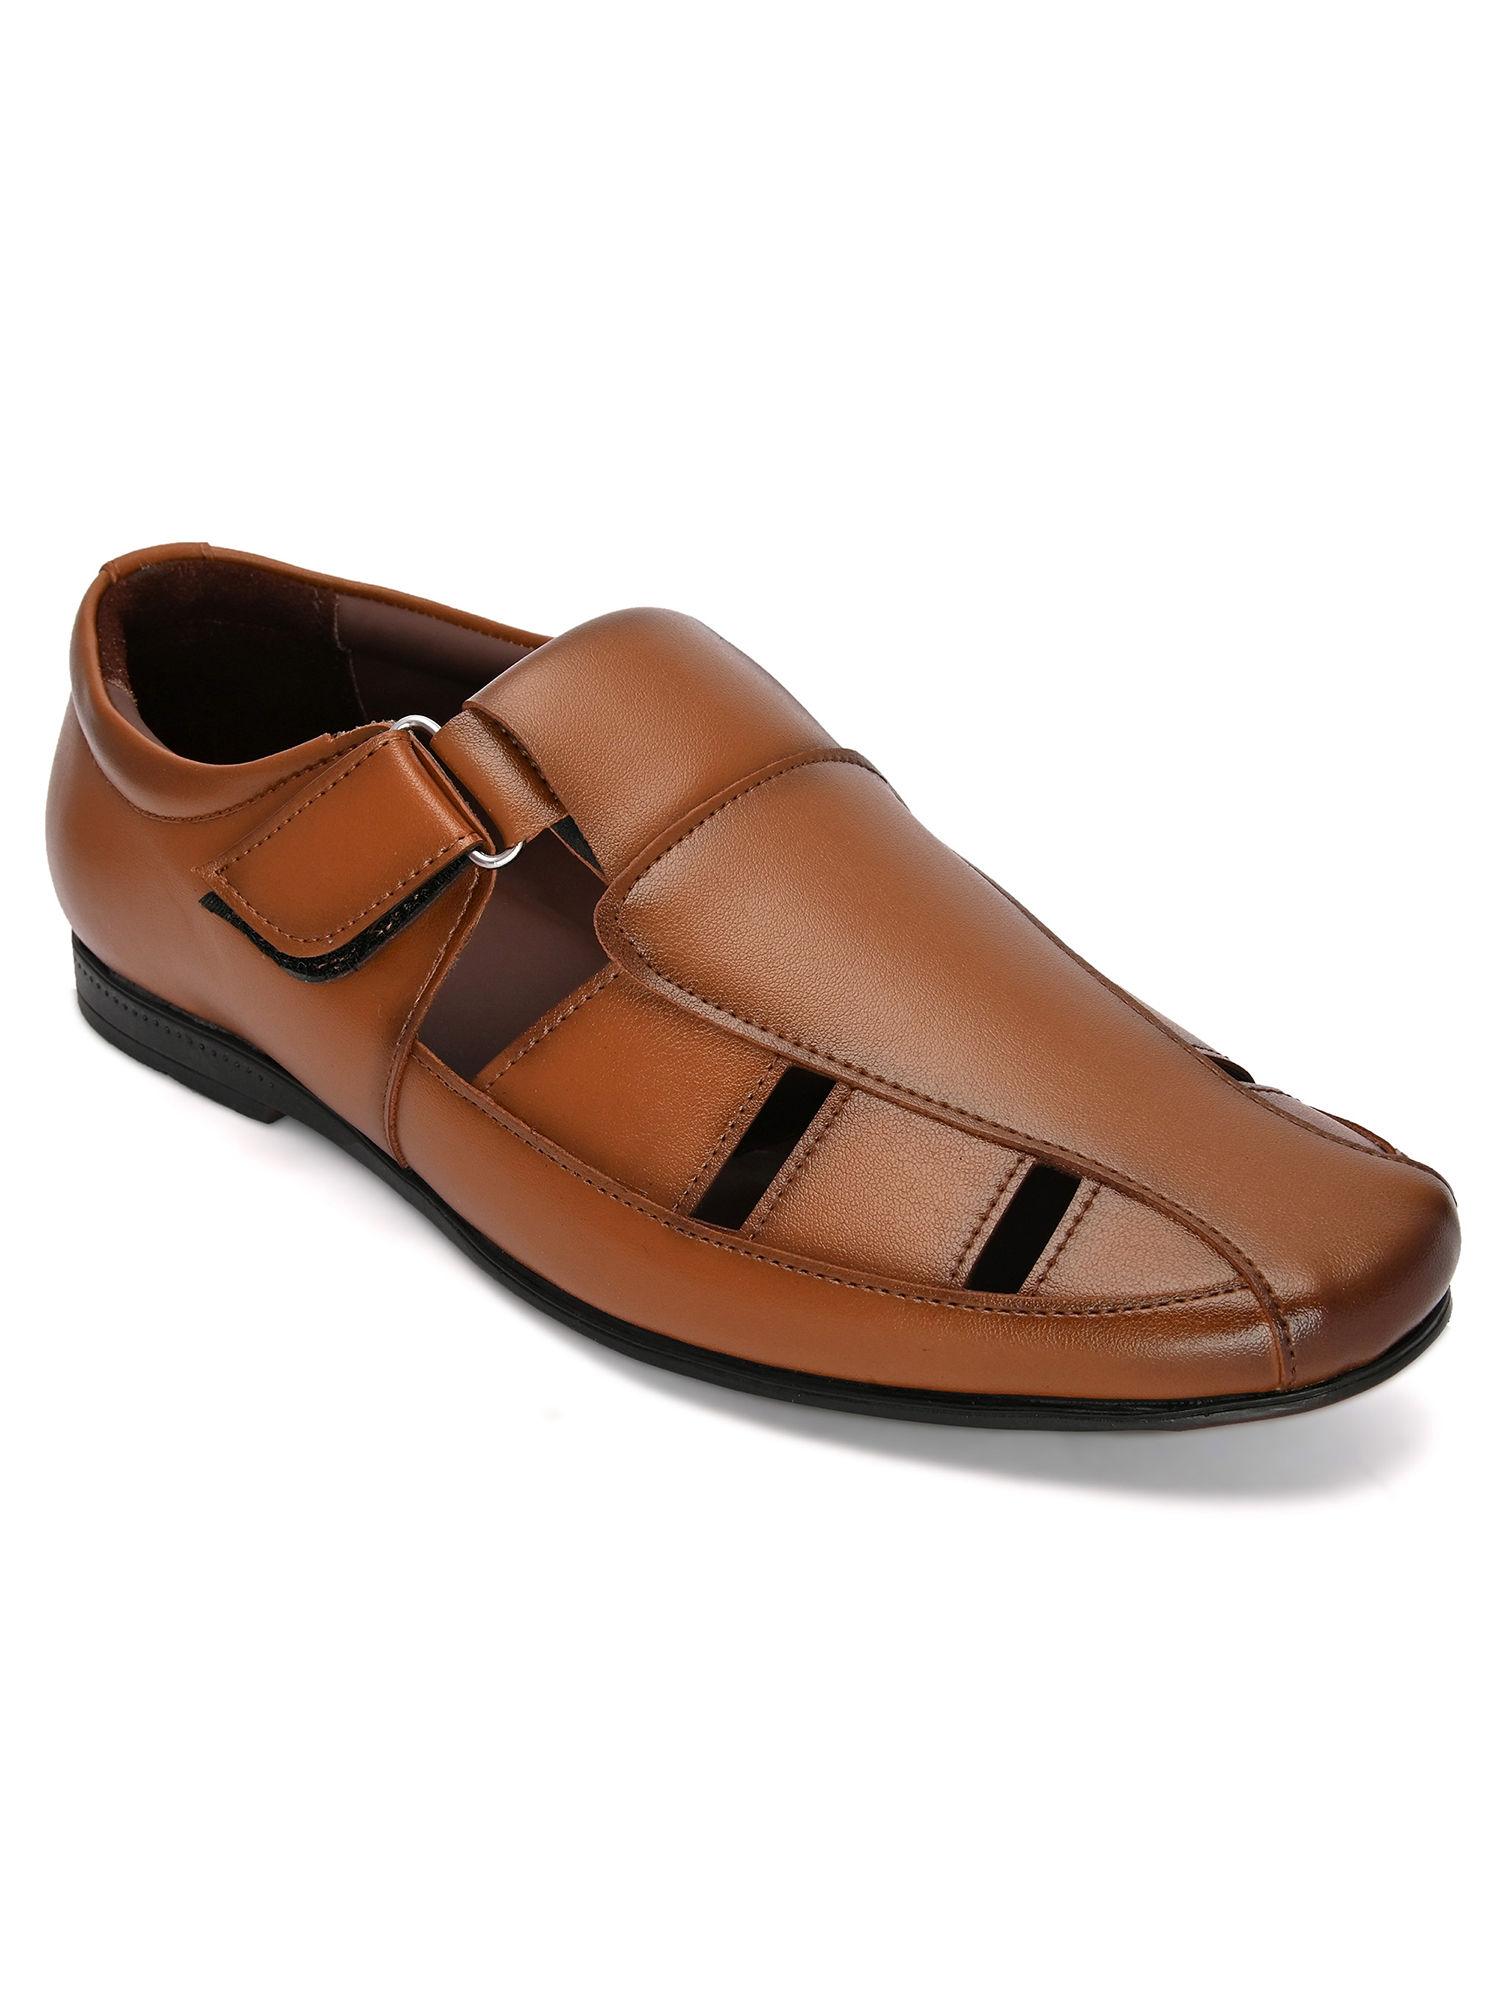 tan shoe-style sandals